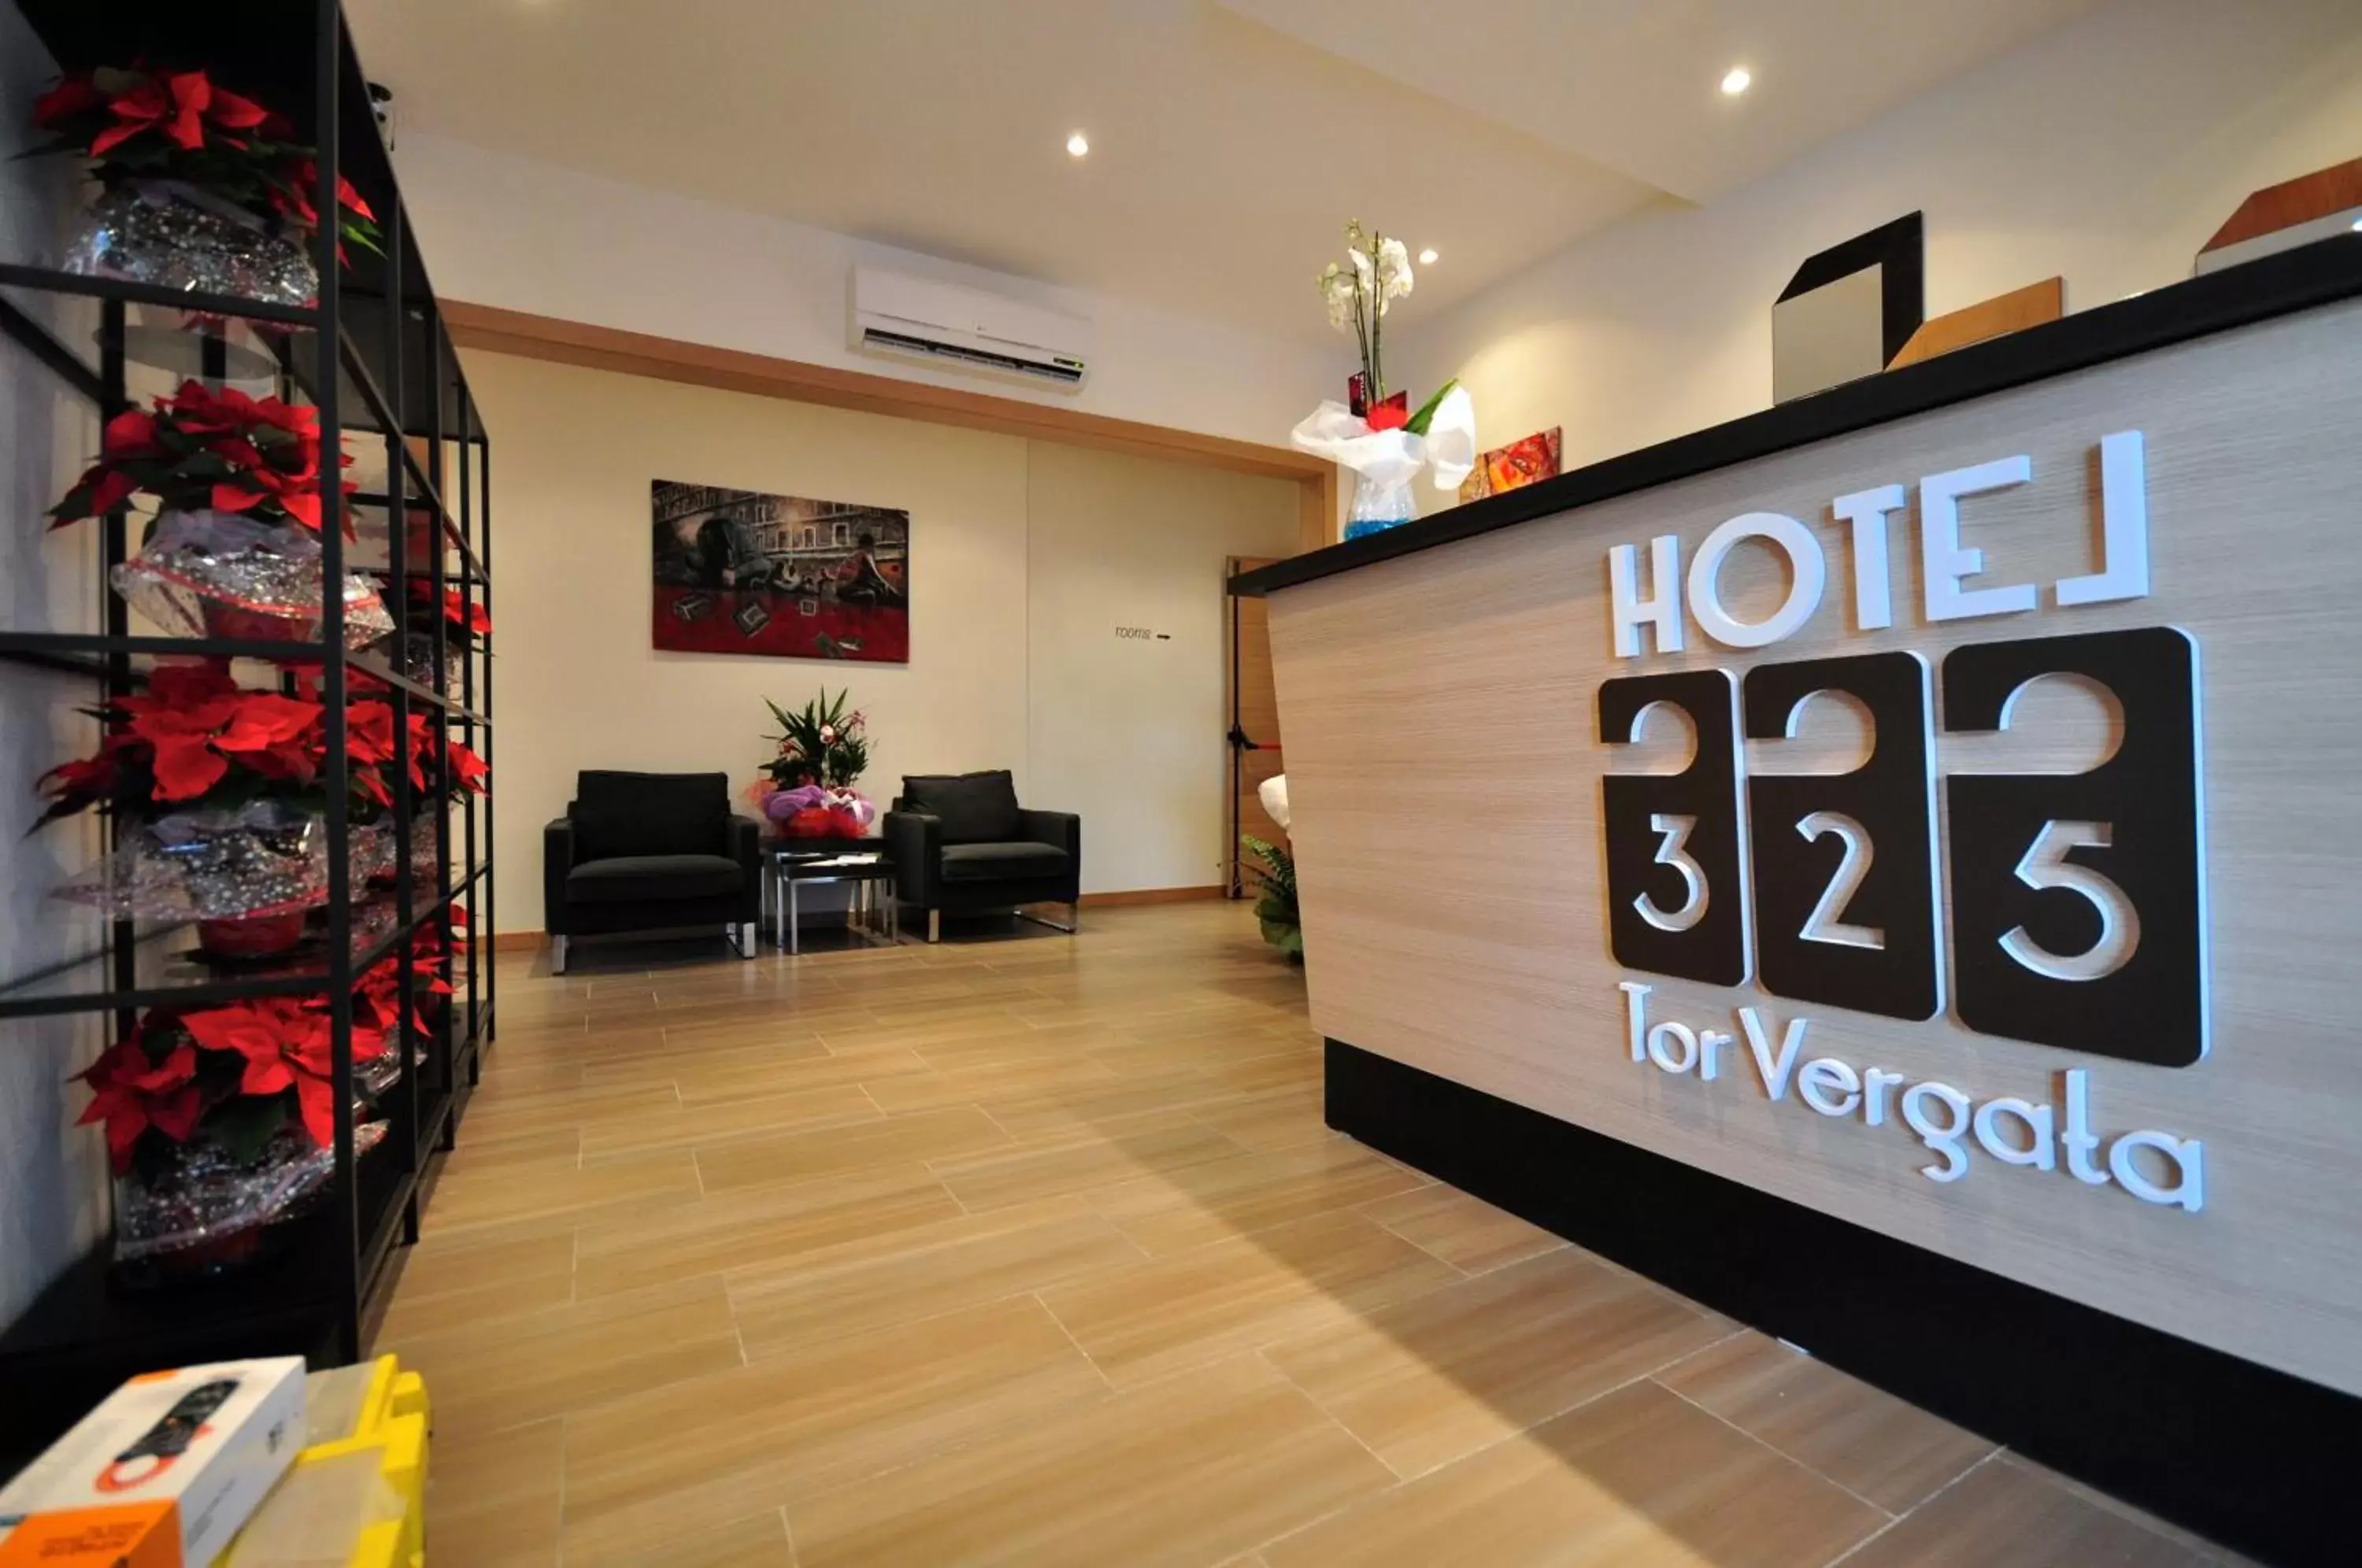 Lobby or reception in Hotel 325 Tor Vergata